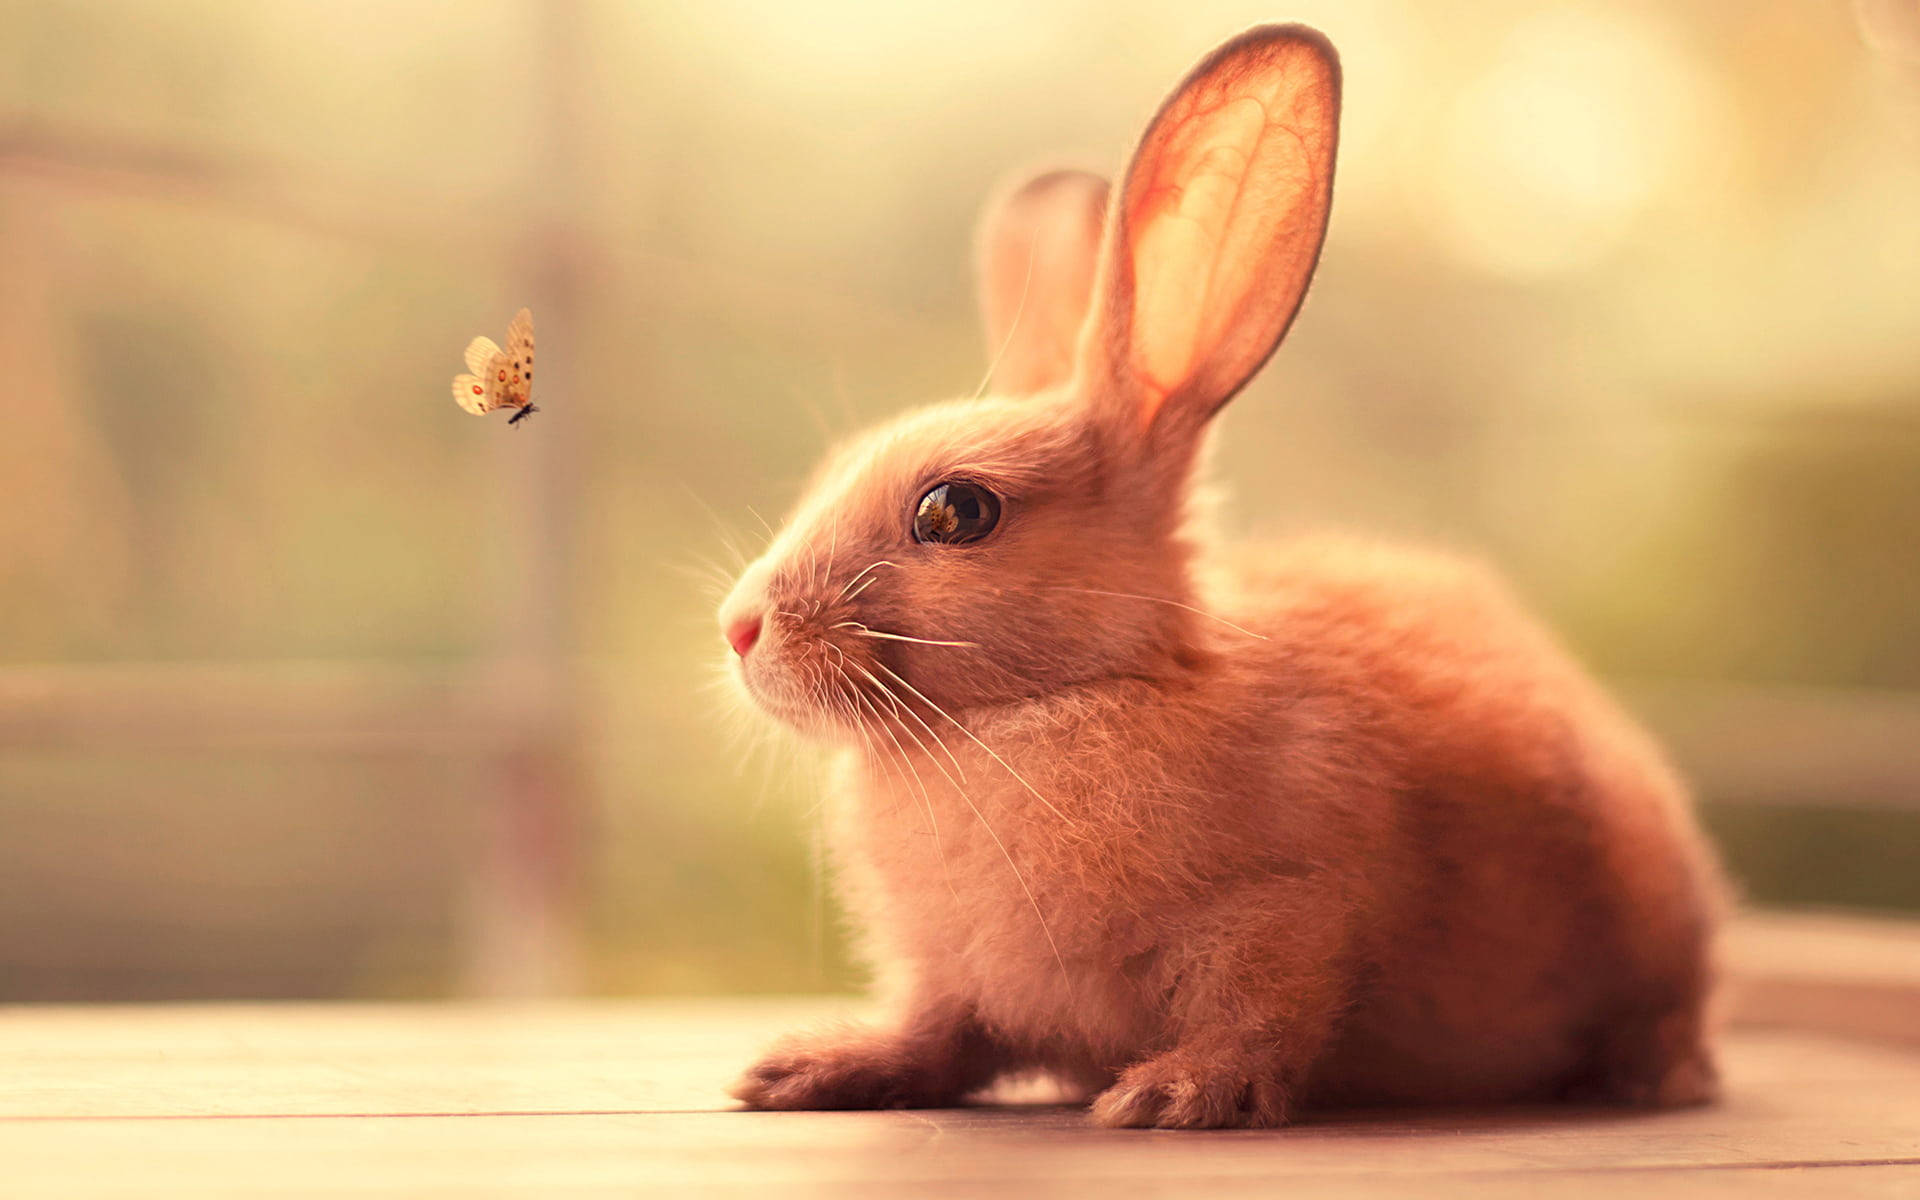 Bad Bunny Inspired Yonaguni – A&A Self-Creations